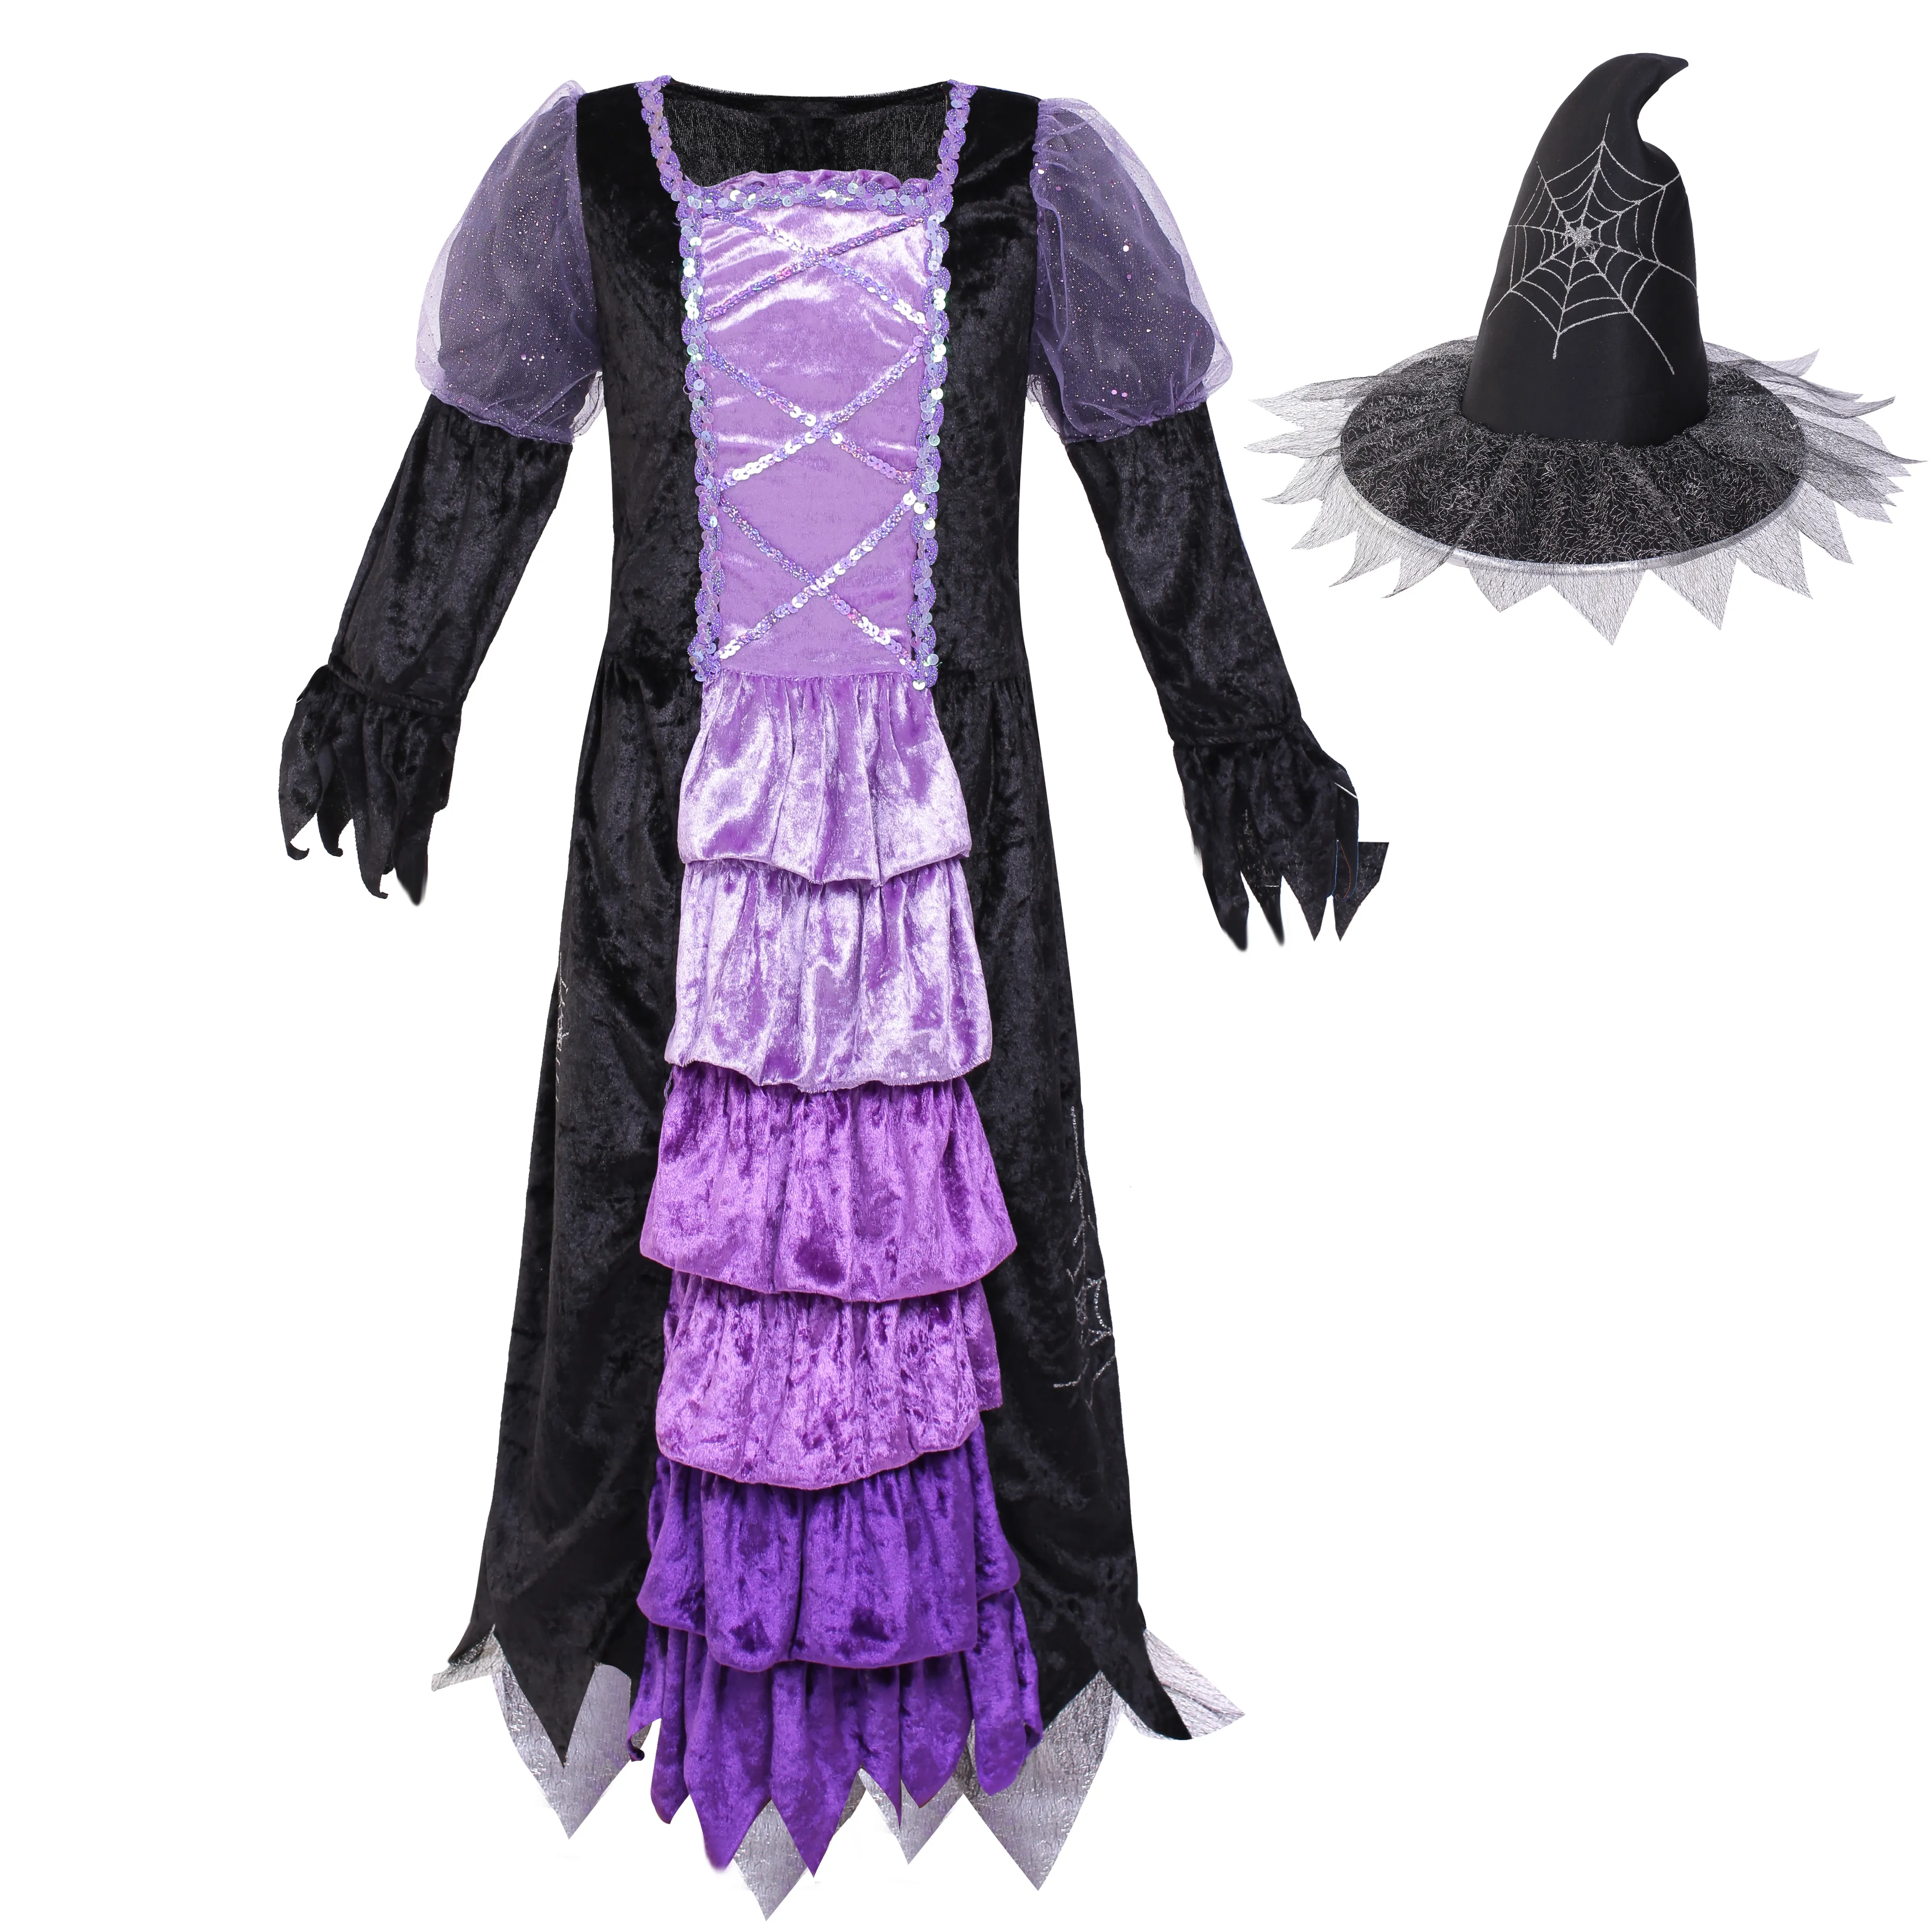 Fantasia da menina da bruxa do dia das bruxas, vestido de halloween para festa fantasia da princesa cosplay